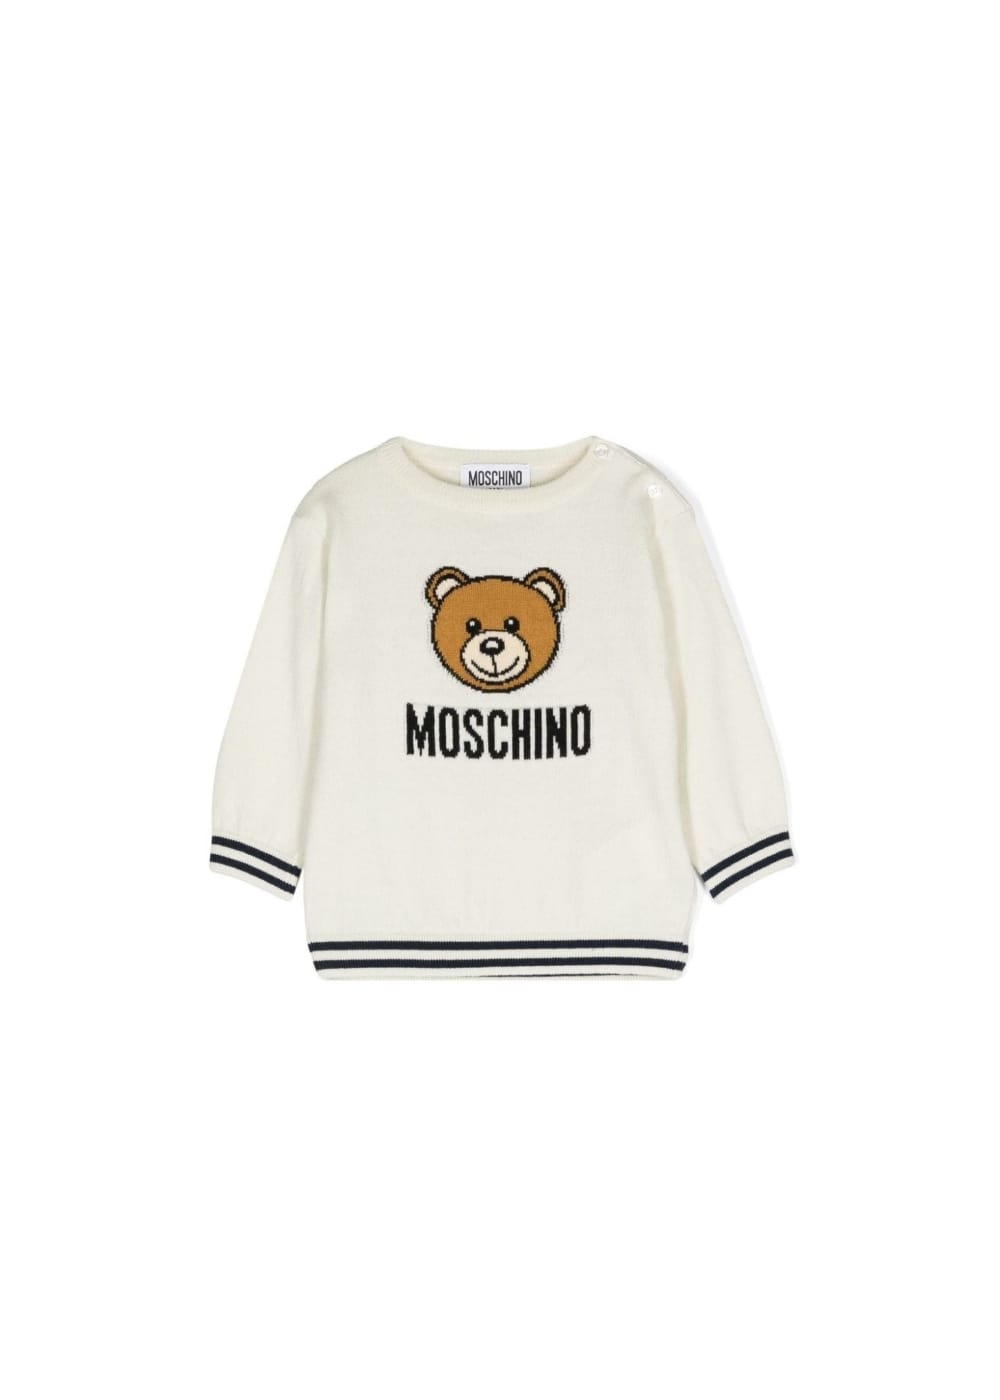 Featured image for “Moschino Maglione Teddy Bear con Ricamo”